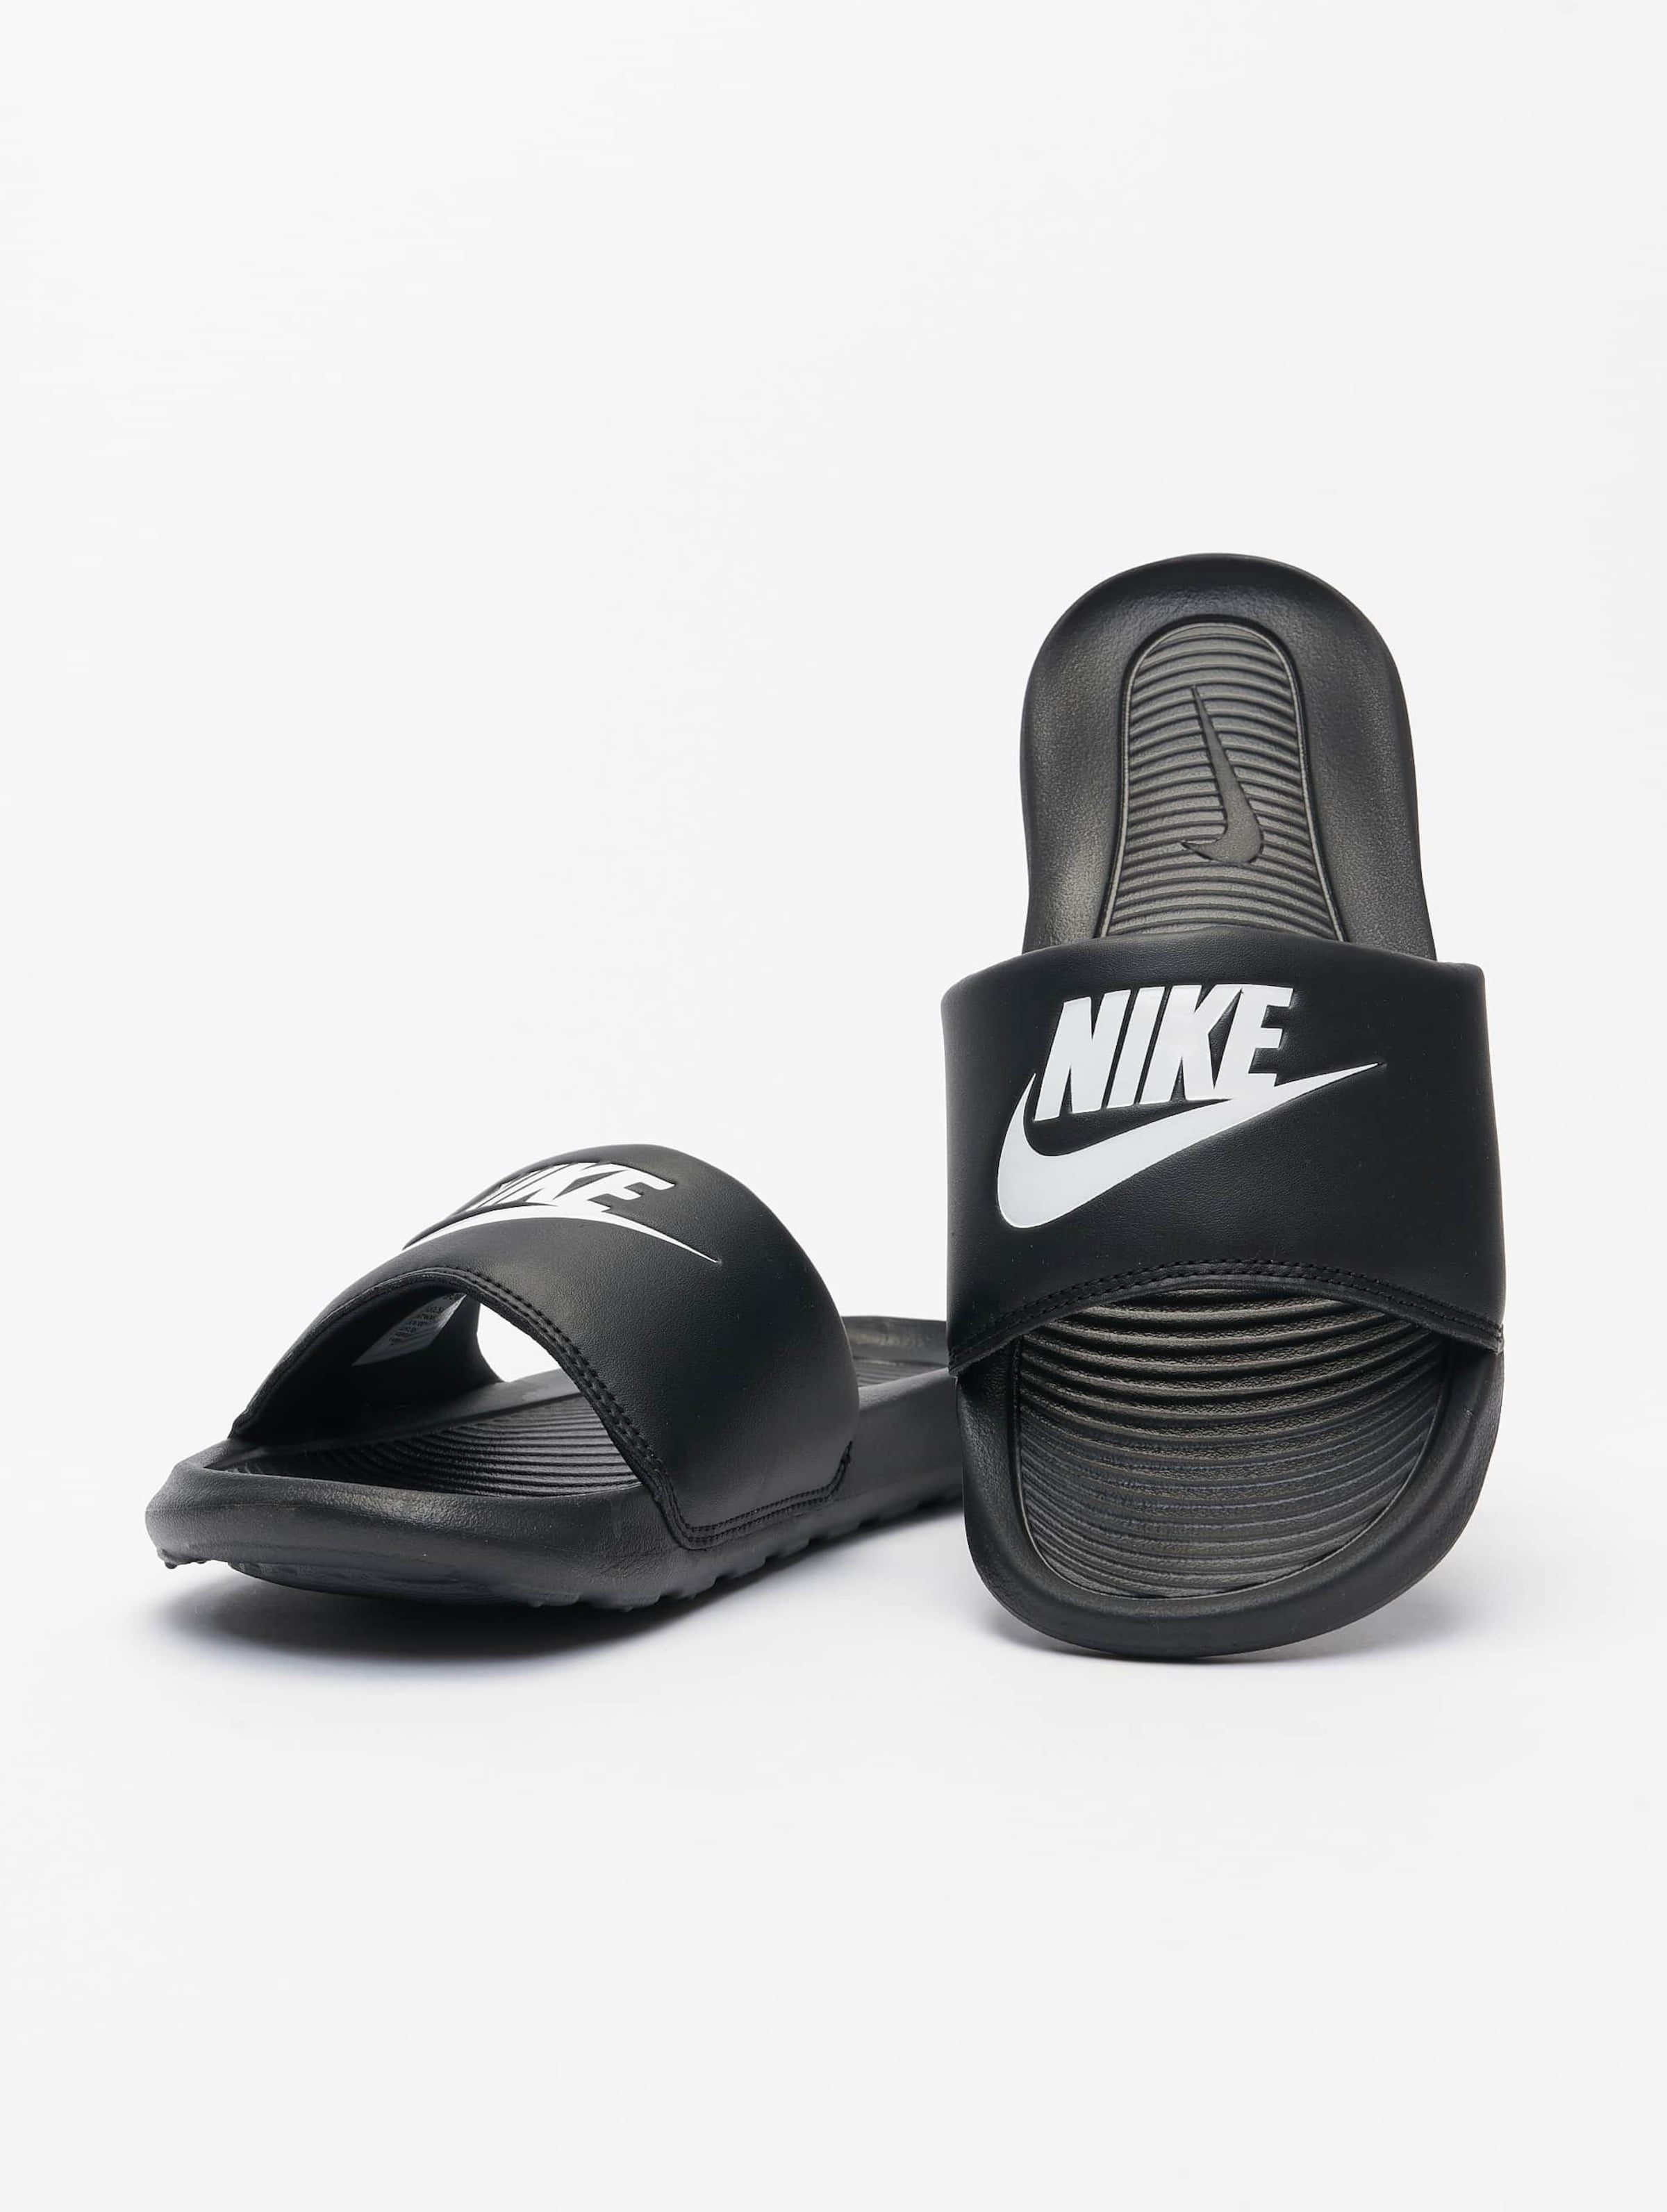 Shoe Carnival: Nike slides for only $19.98?! | Milled